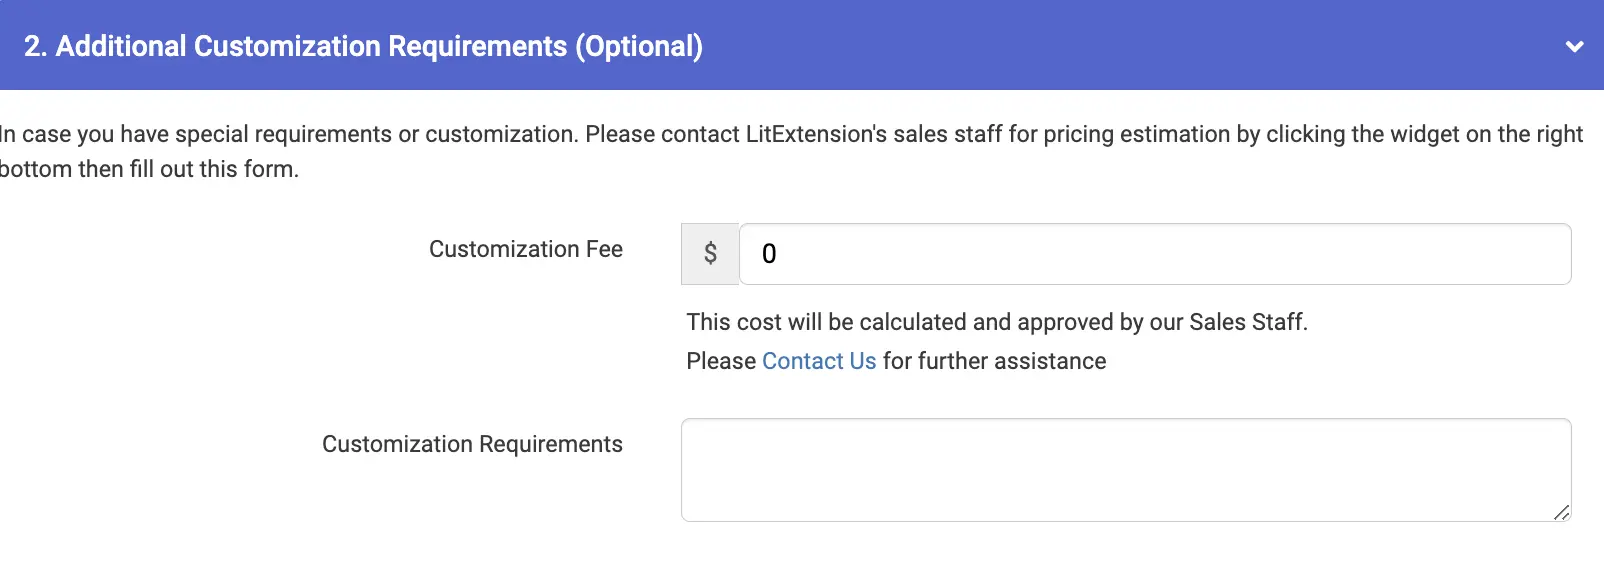 litextension additional customization requirements 